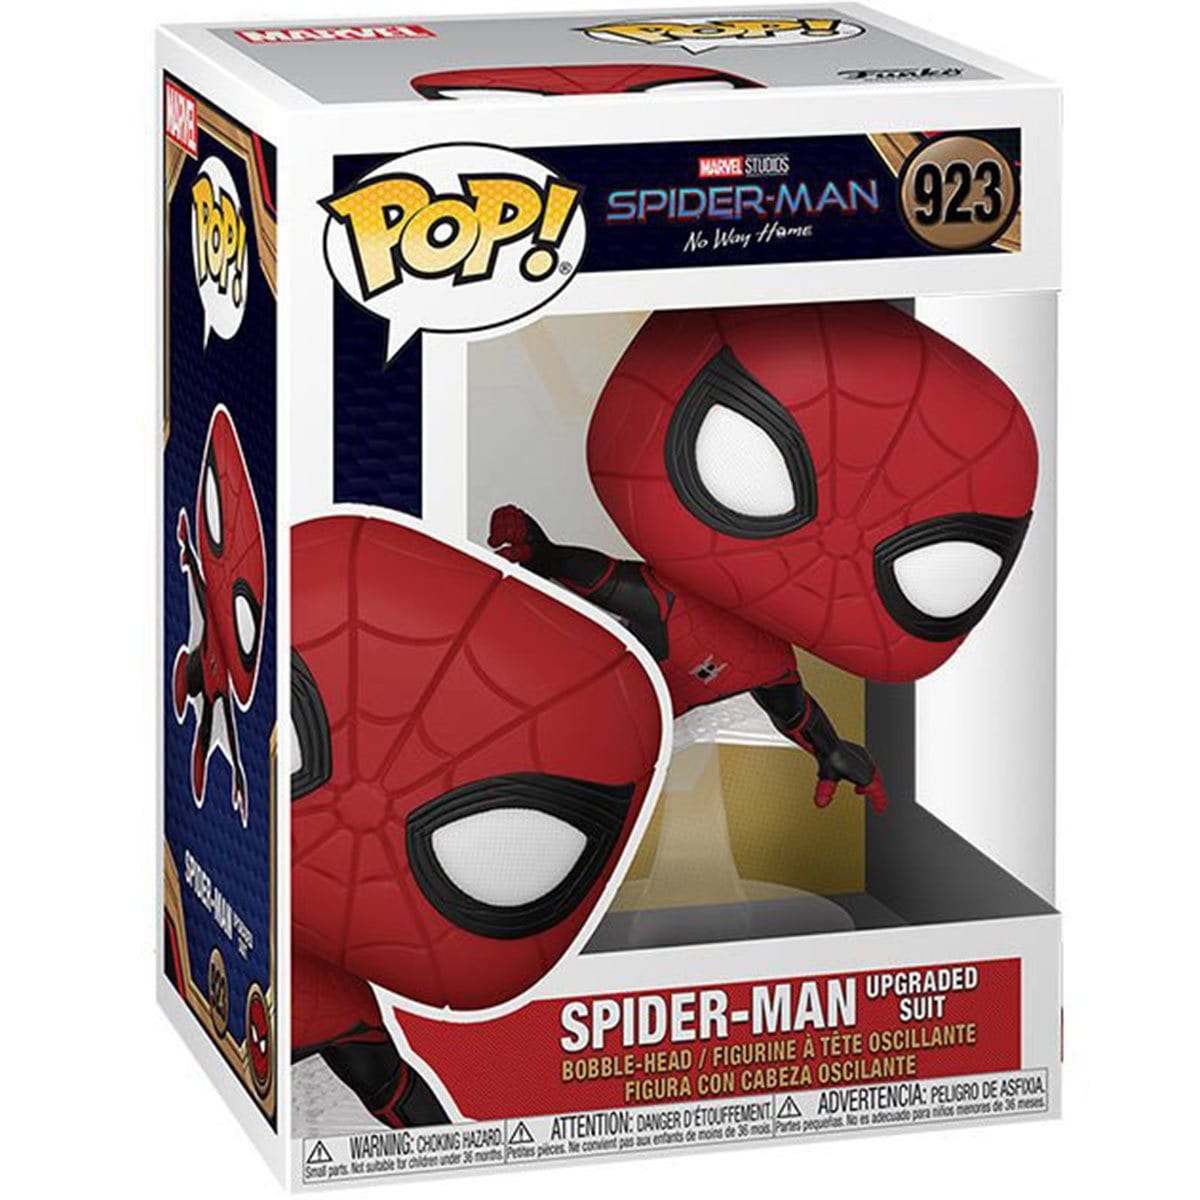 Spider-Man: No Way Home Spider-Man Upgraded Suit Pop! Vinyl Figure Media 2 of 2